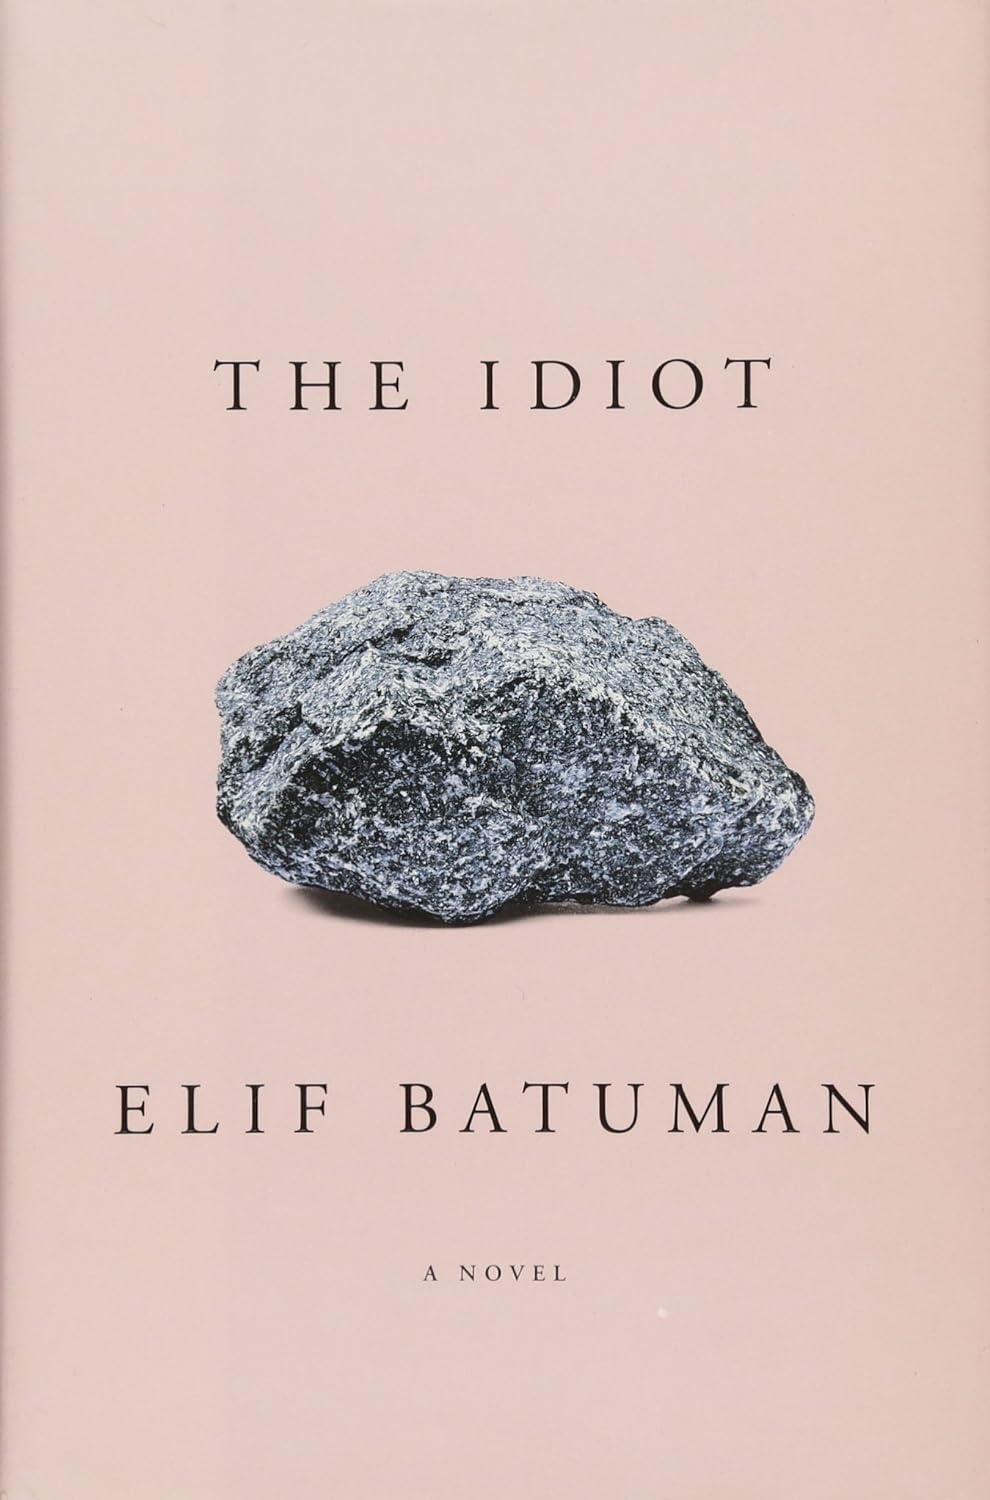 “The Idiot” by Elif Batuman